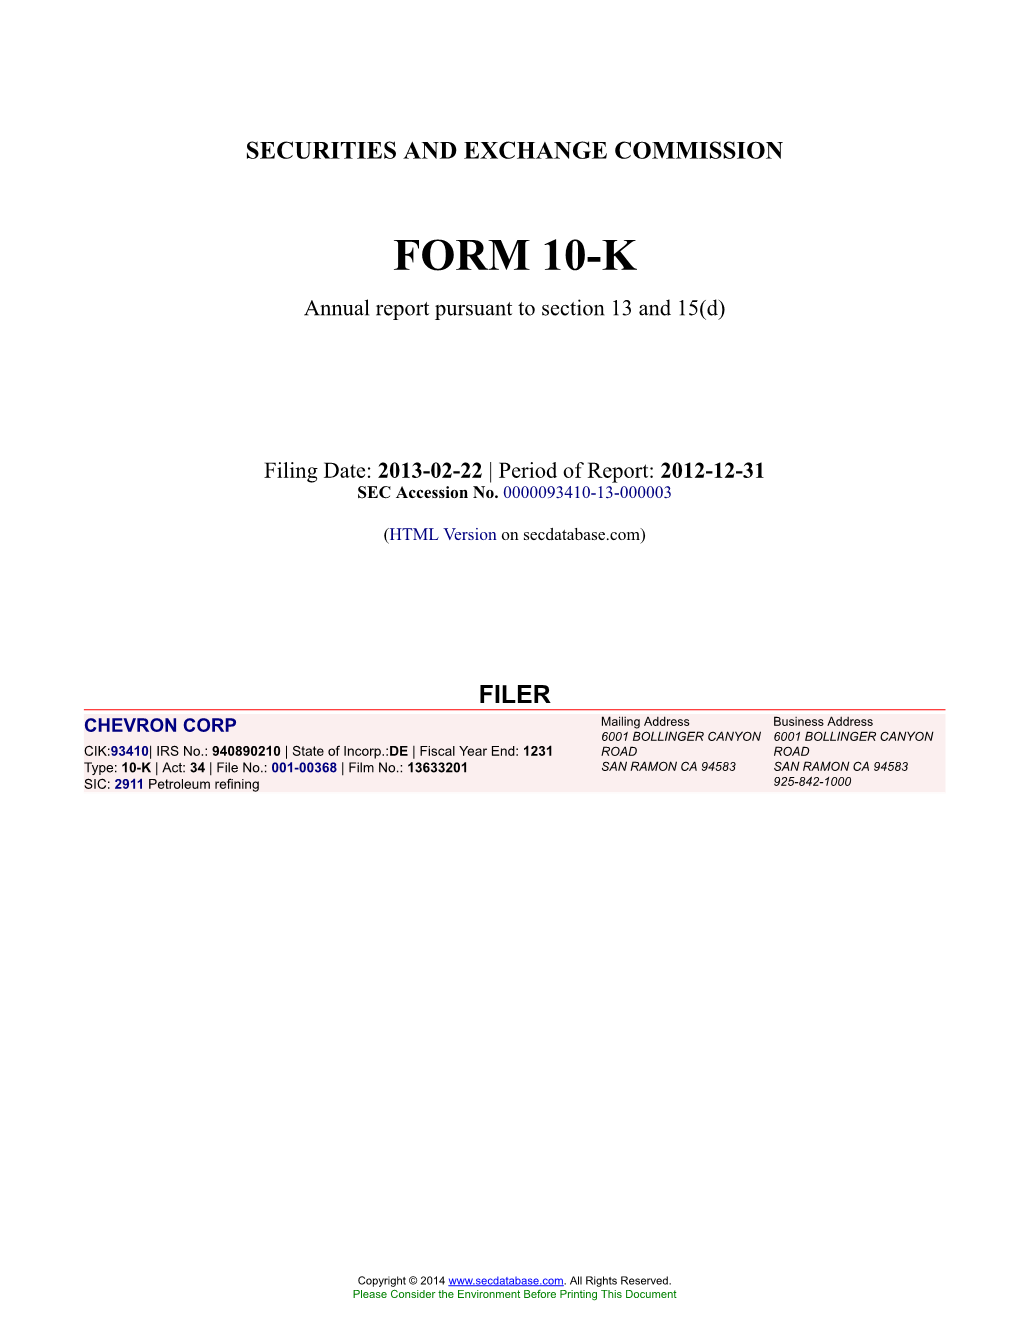 CHEVRON CORP Form 10-K Annual Report Filed 2013-02-22